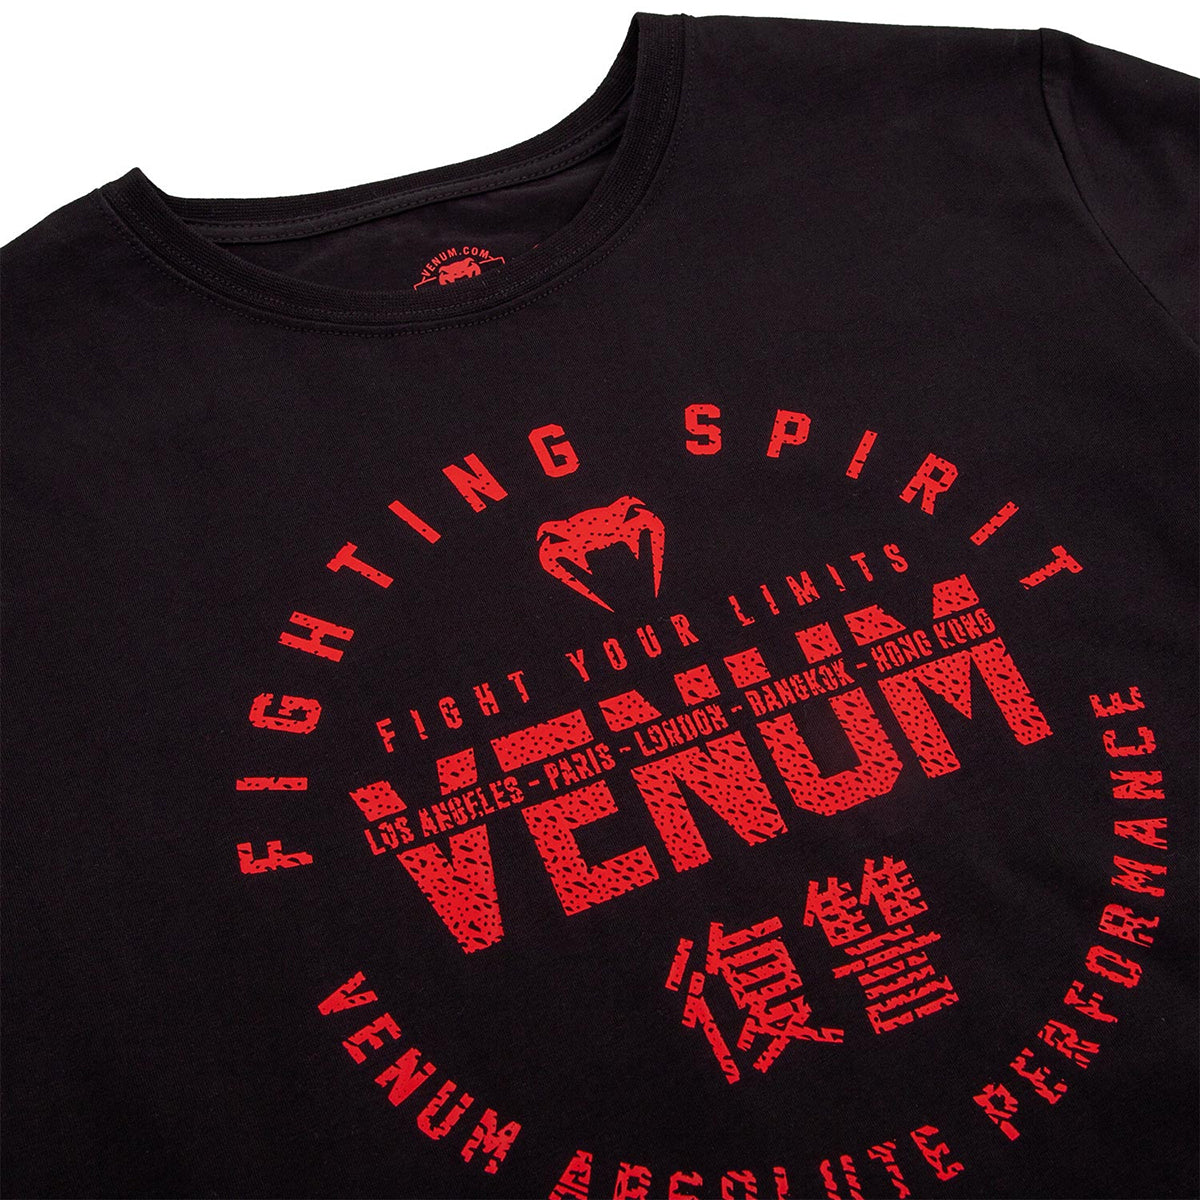 Venum Kids Signature Short Sleeve T-Shirt - Black/Red Venum